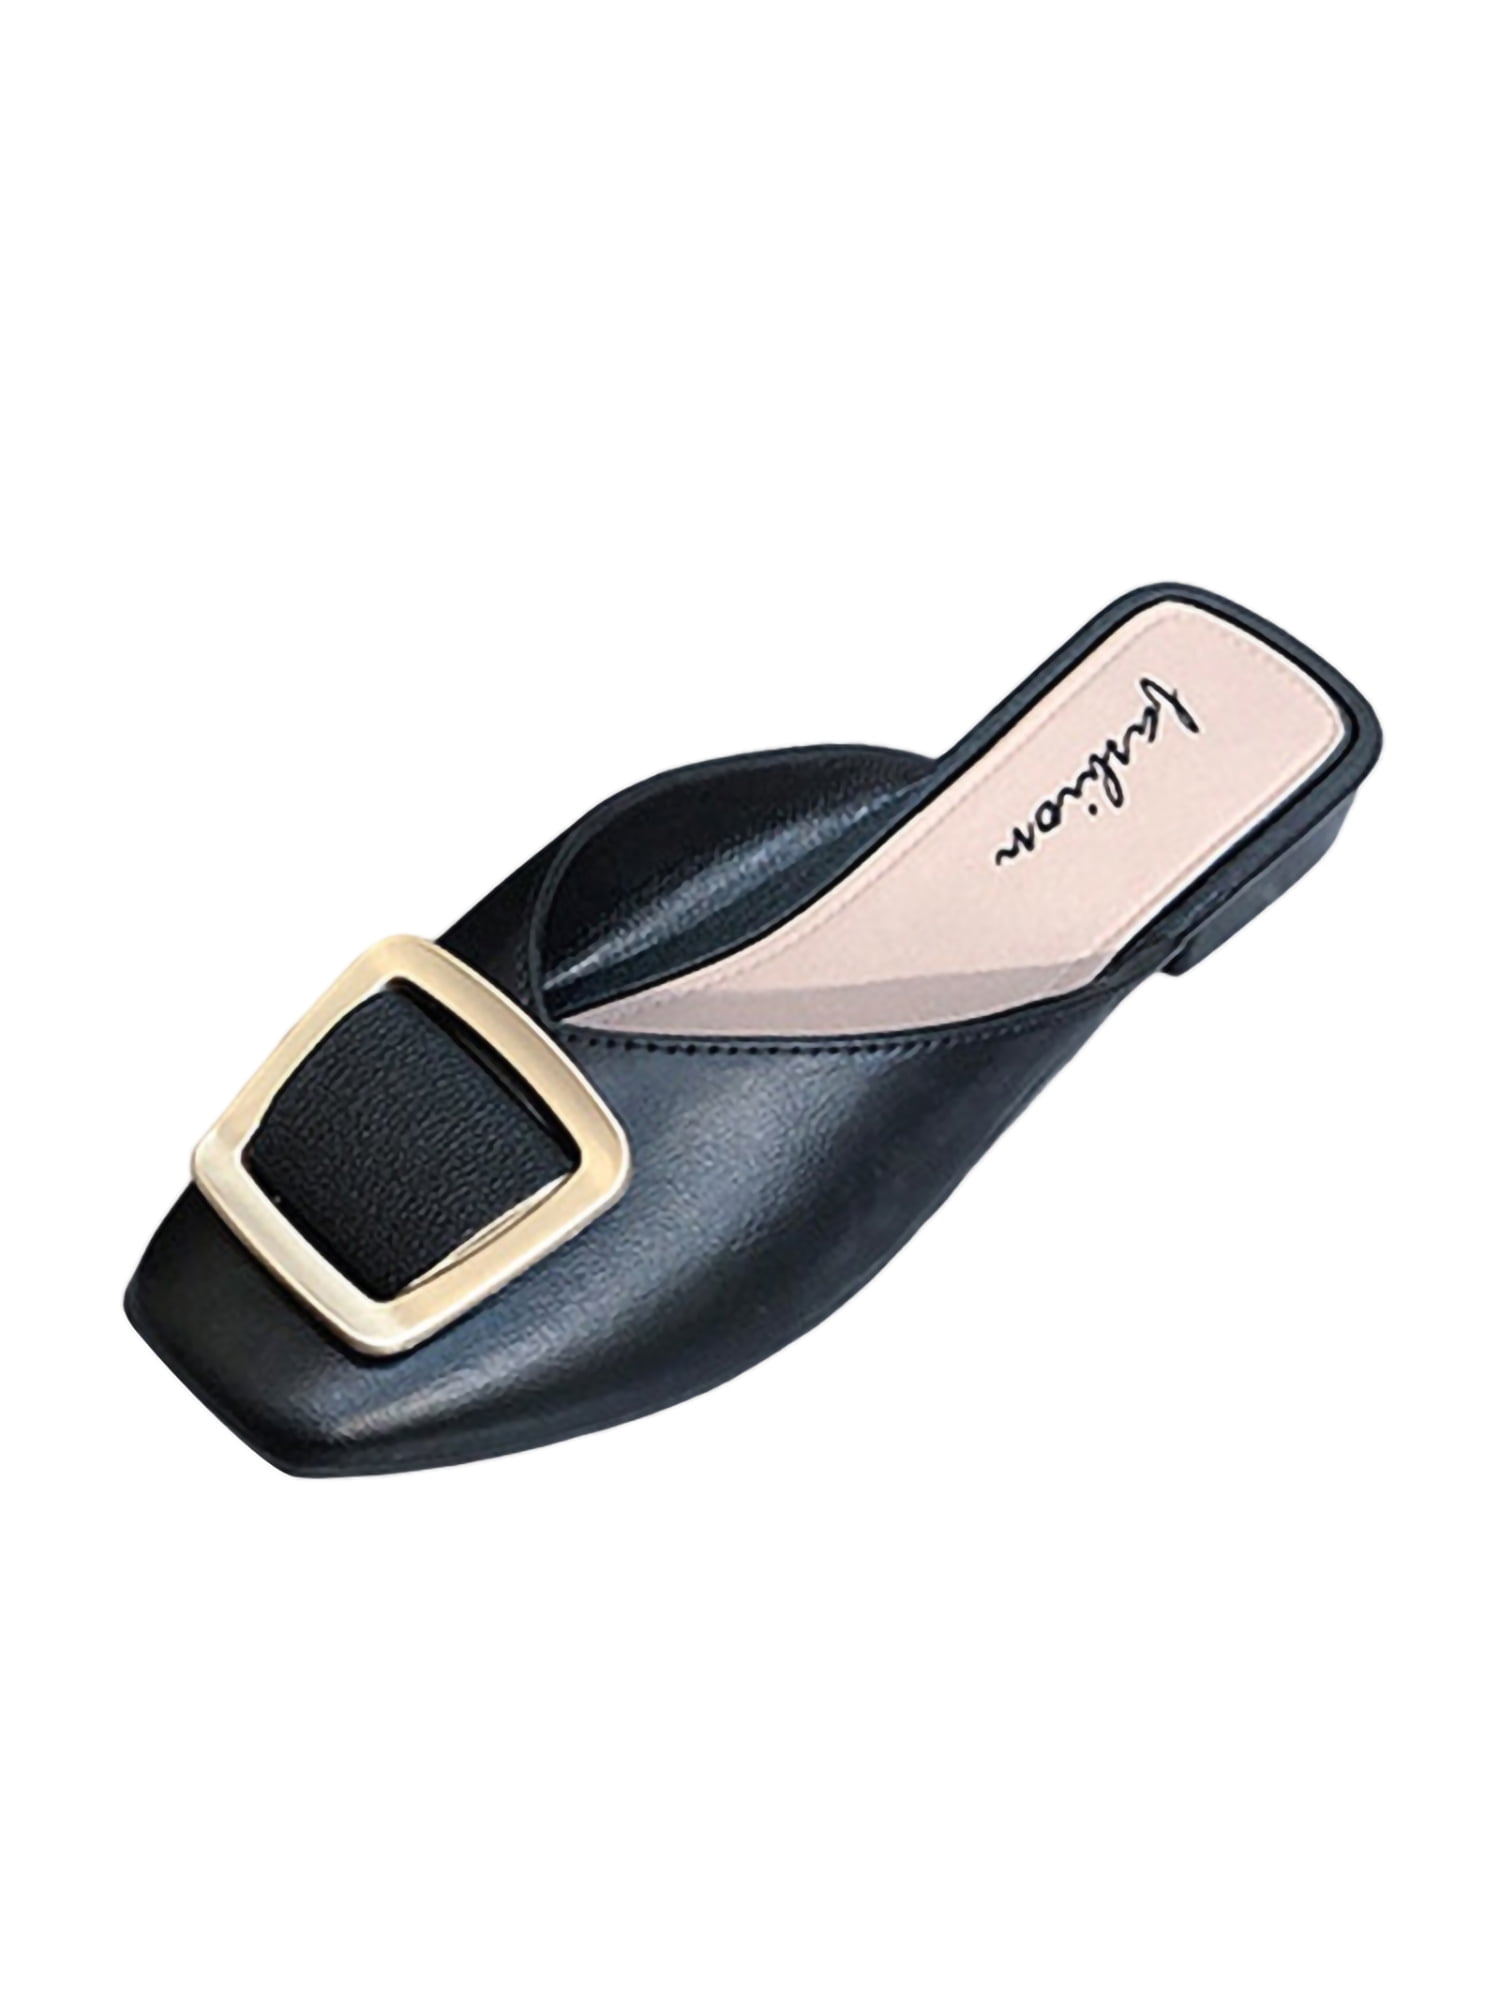 Women's Summer Tassel Slippers Flip Flop Flat Sandals Slide Mules Shoes Outwear 